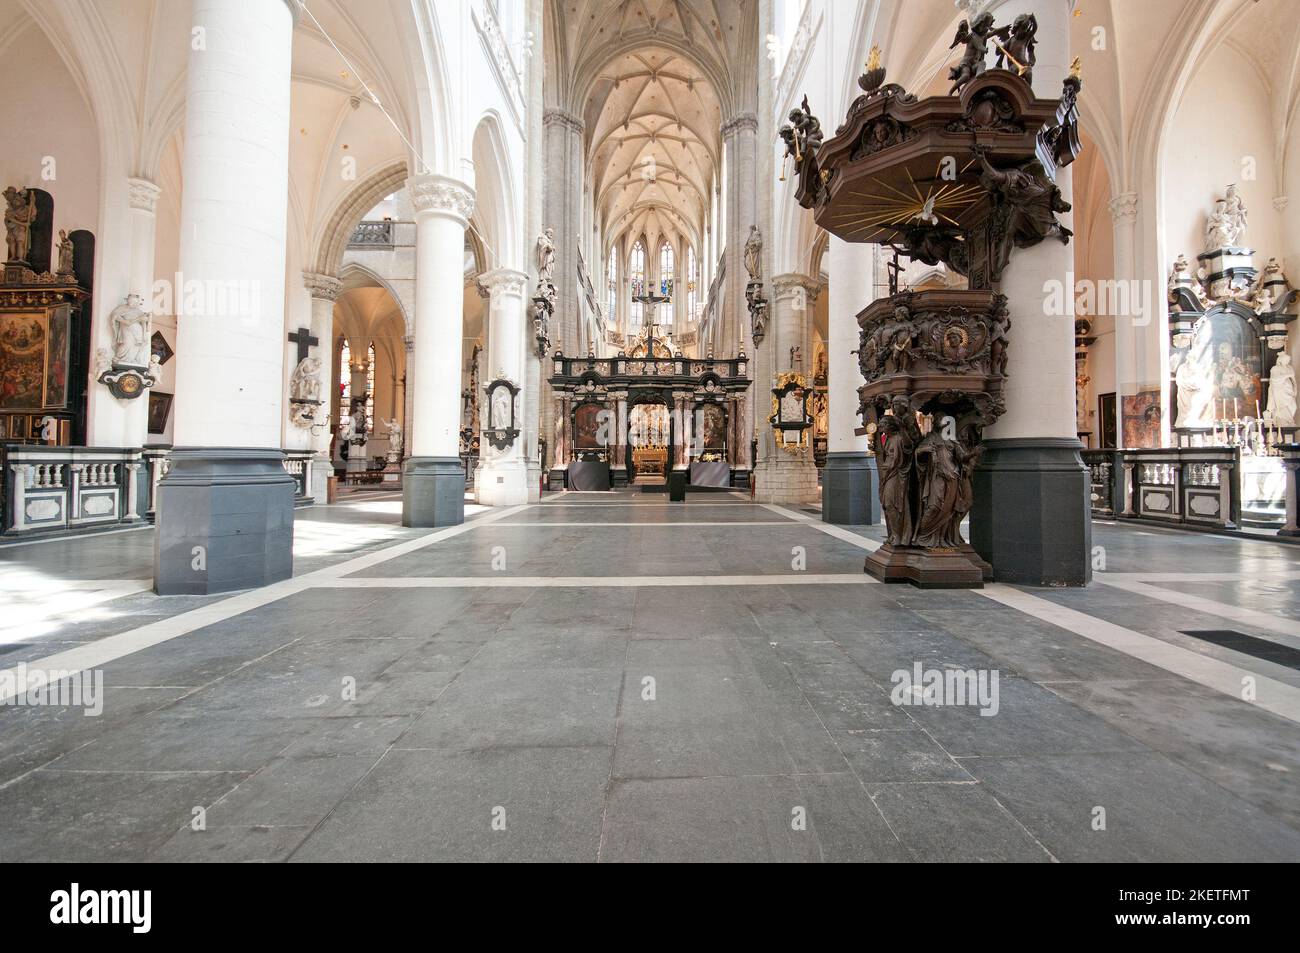 Interior of Saint James Church, Antwerp (Flanders), Belgium Stock Photo